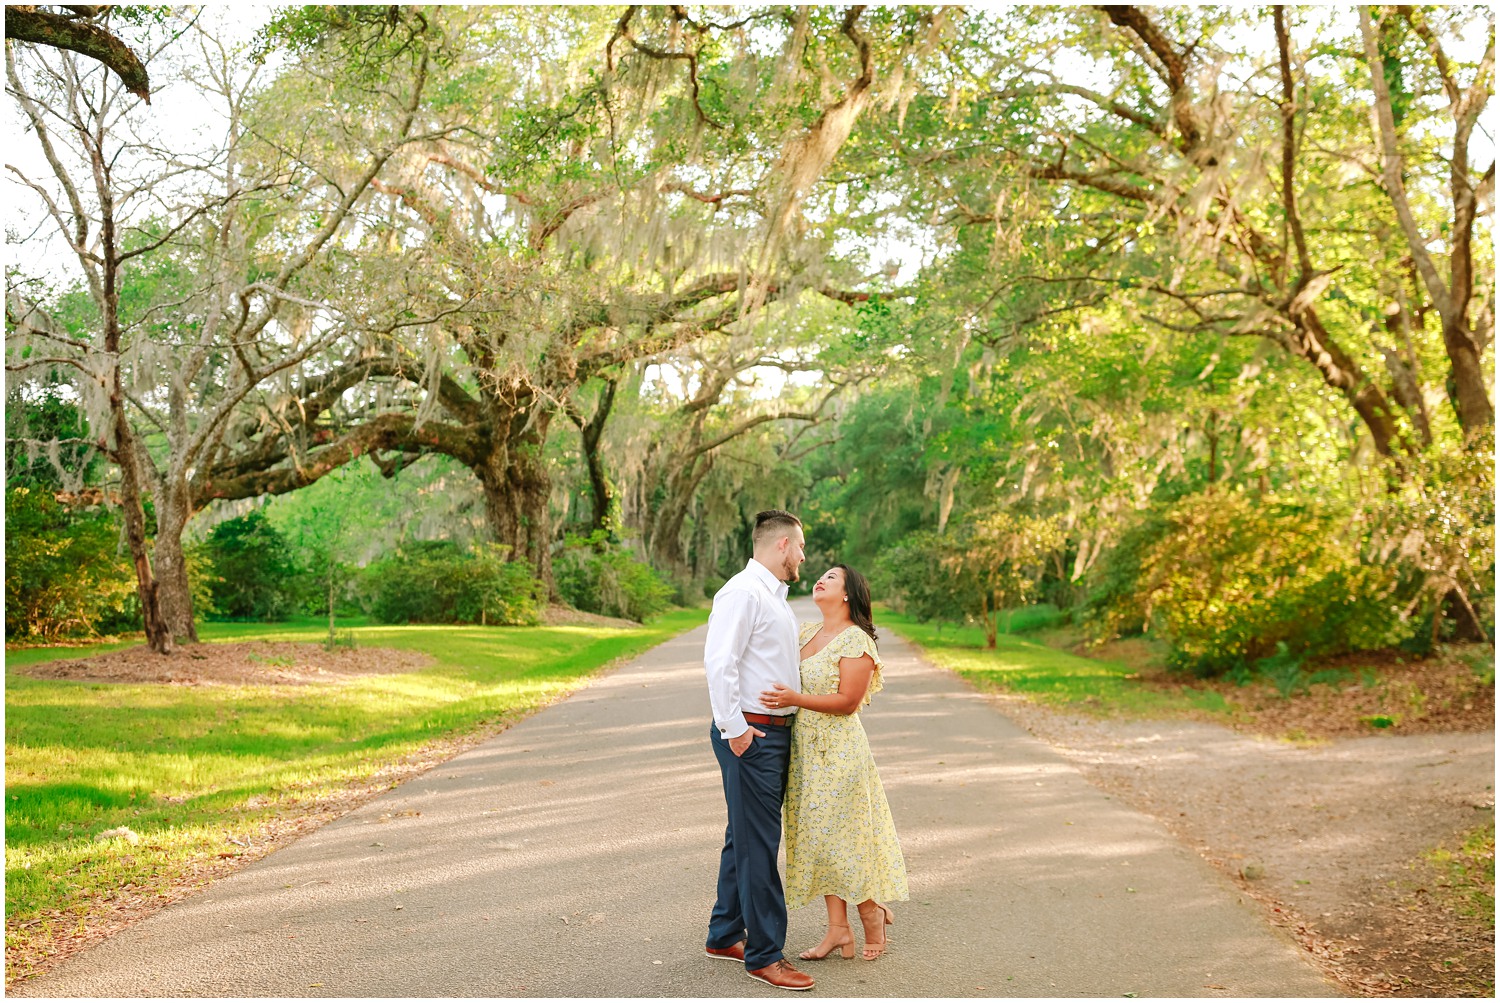 Destination-Wedding-Photographer_Magnolia-Plantation-Engagement-Session_Jess-and-Justin_Charleston-South-Carolina_0037.jpg